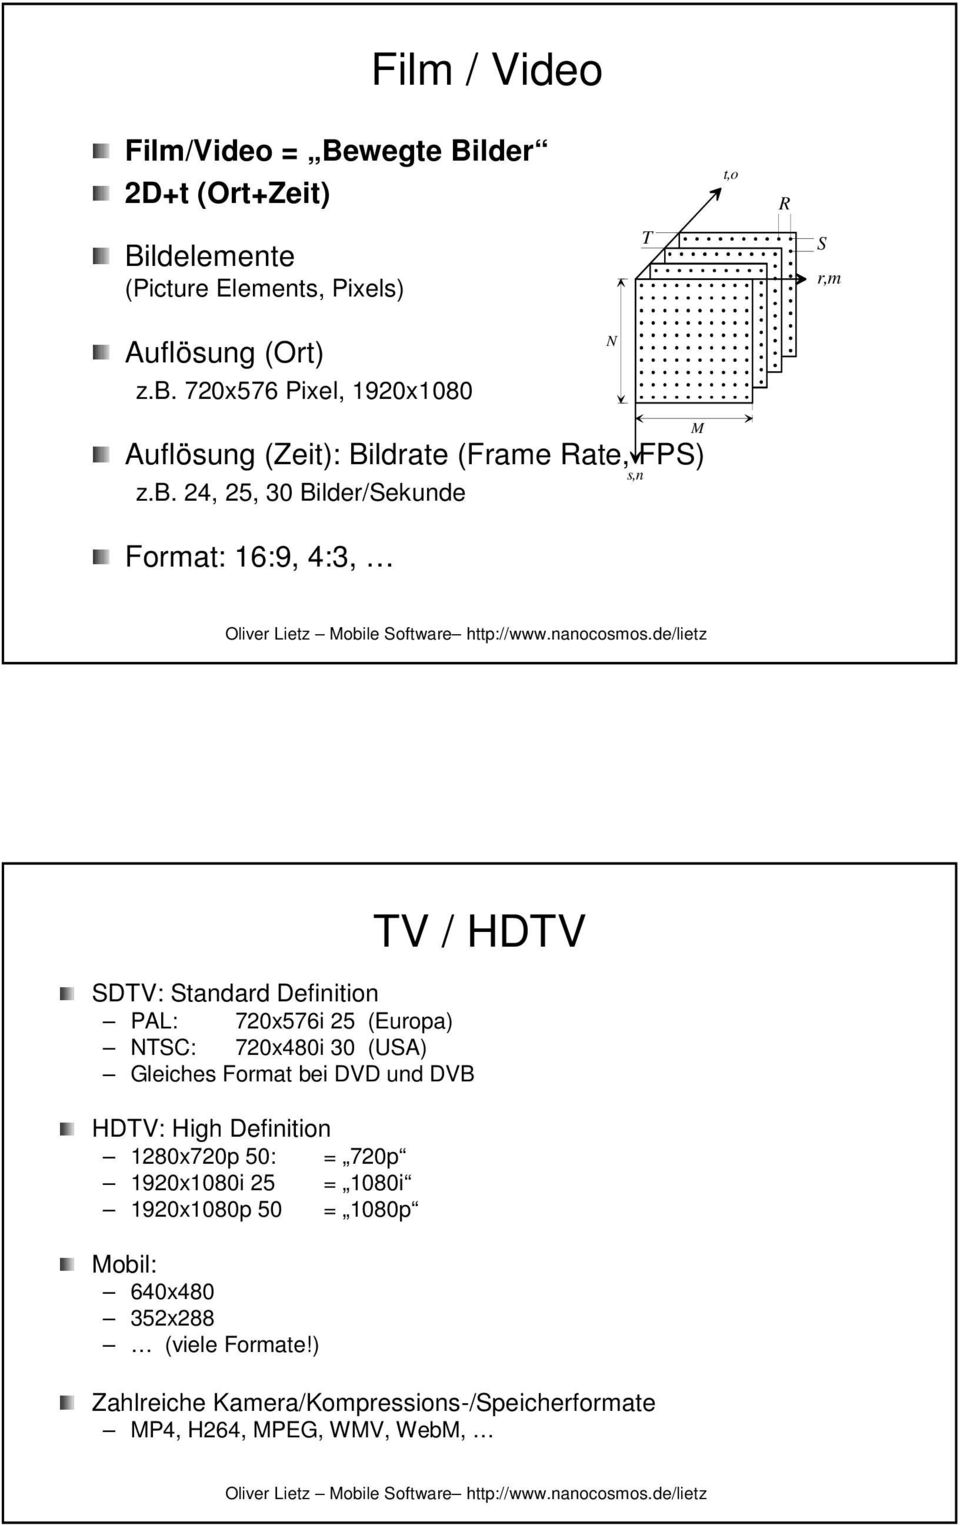 24, 25,, 30 Bilder/Sekunde Format: 16:9, 4:3, N s,n M TV / HDTV SDTV: Standard Definition PAL: 720x576i 25 (Europa) NTSC: 720x480i 30 (USA) Gleiches